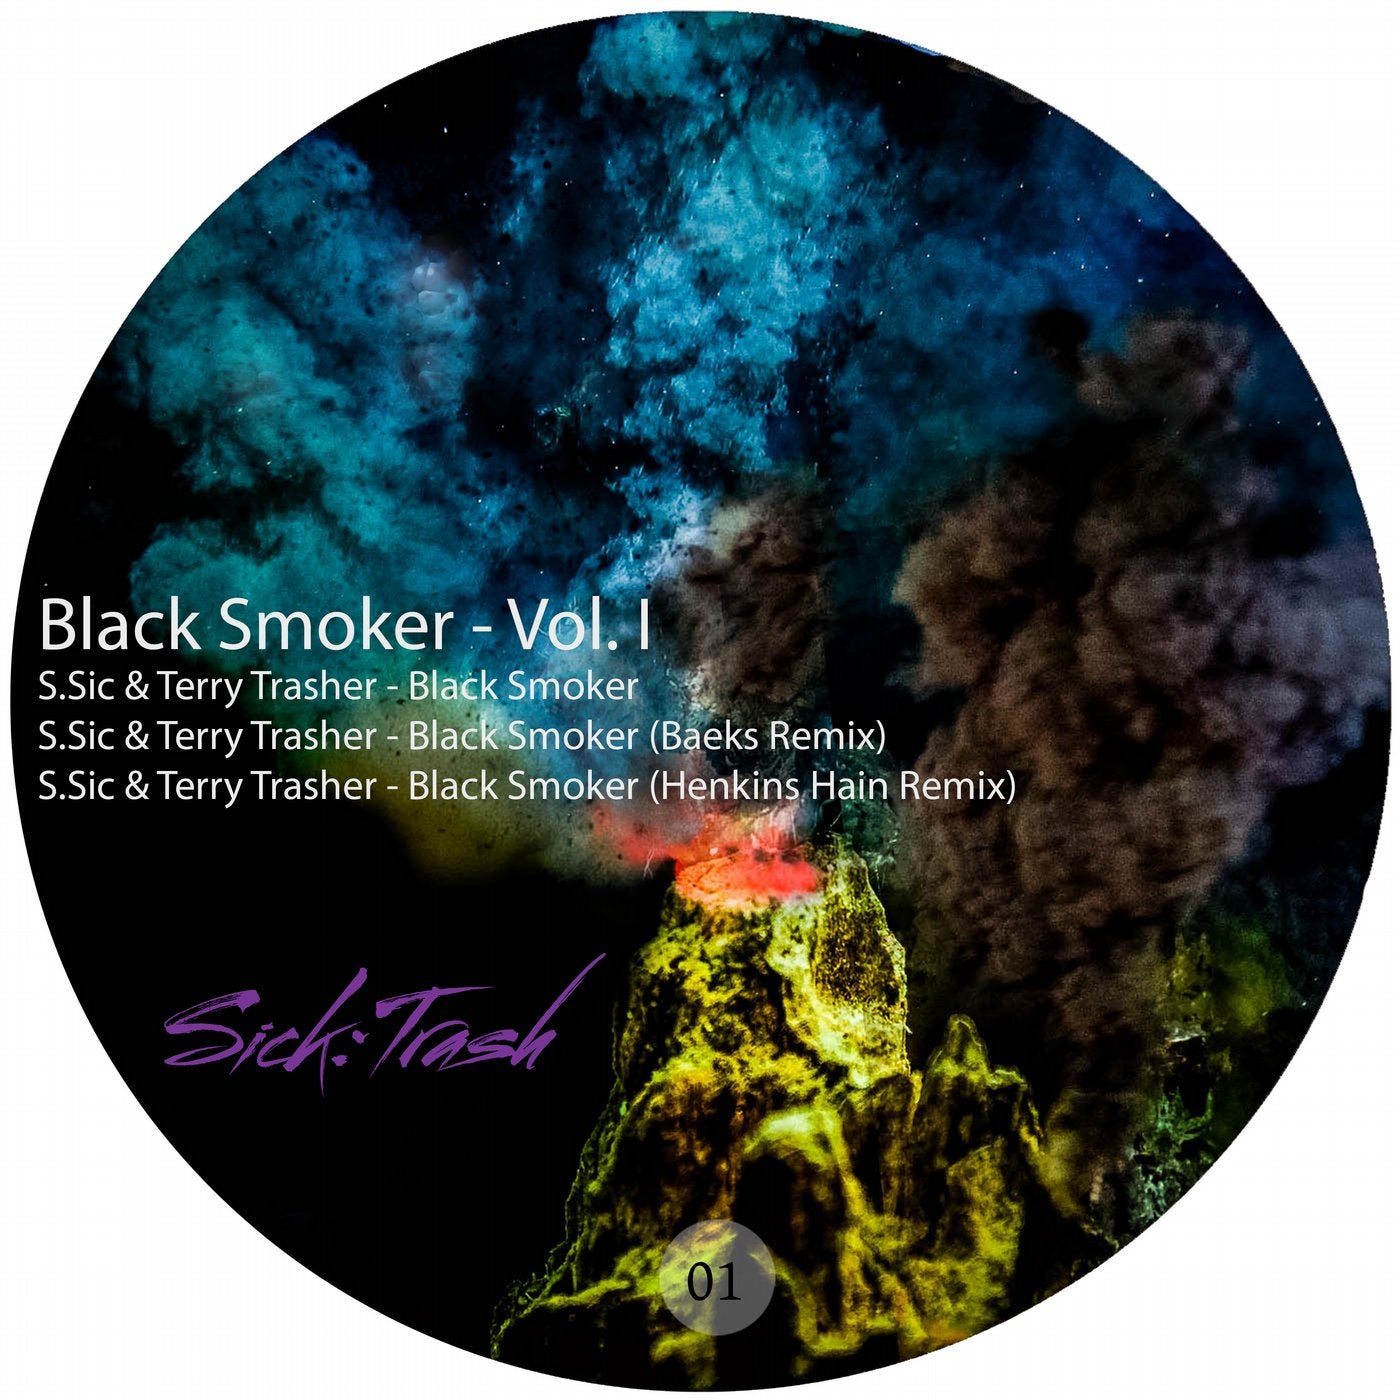 Black Smoker, Vol. I